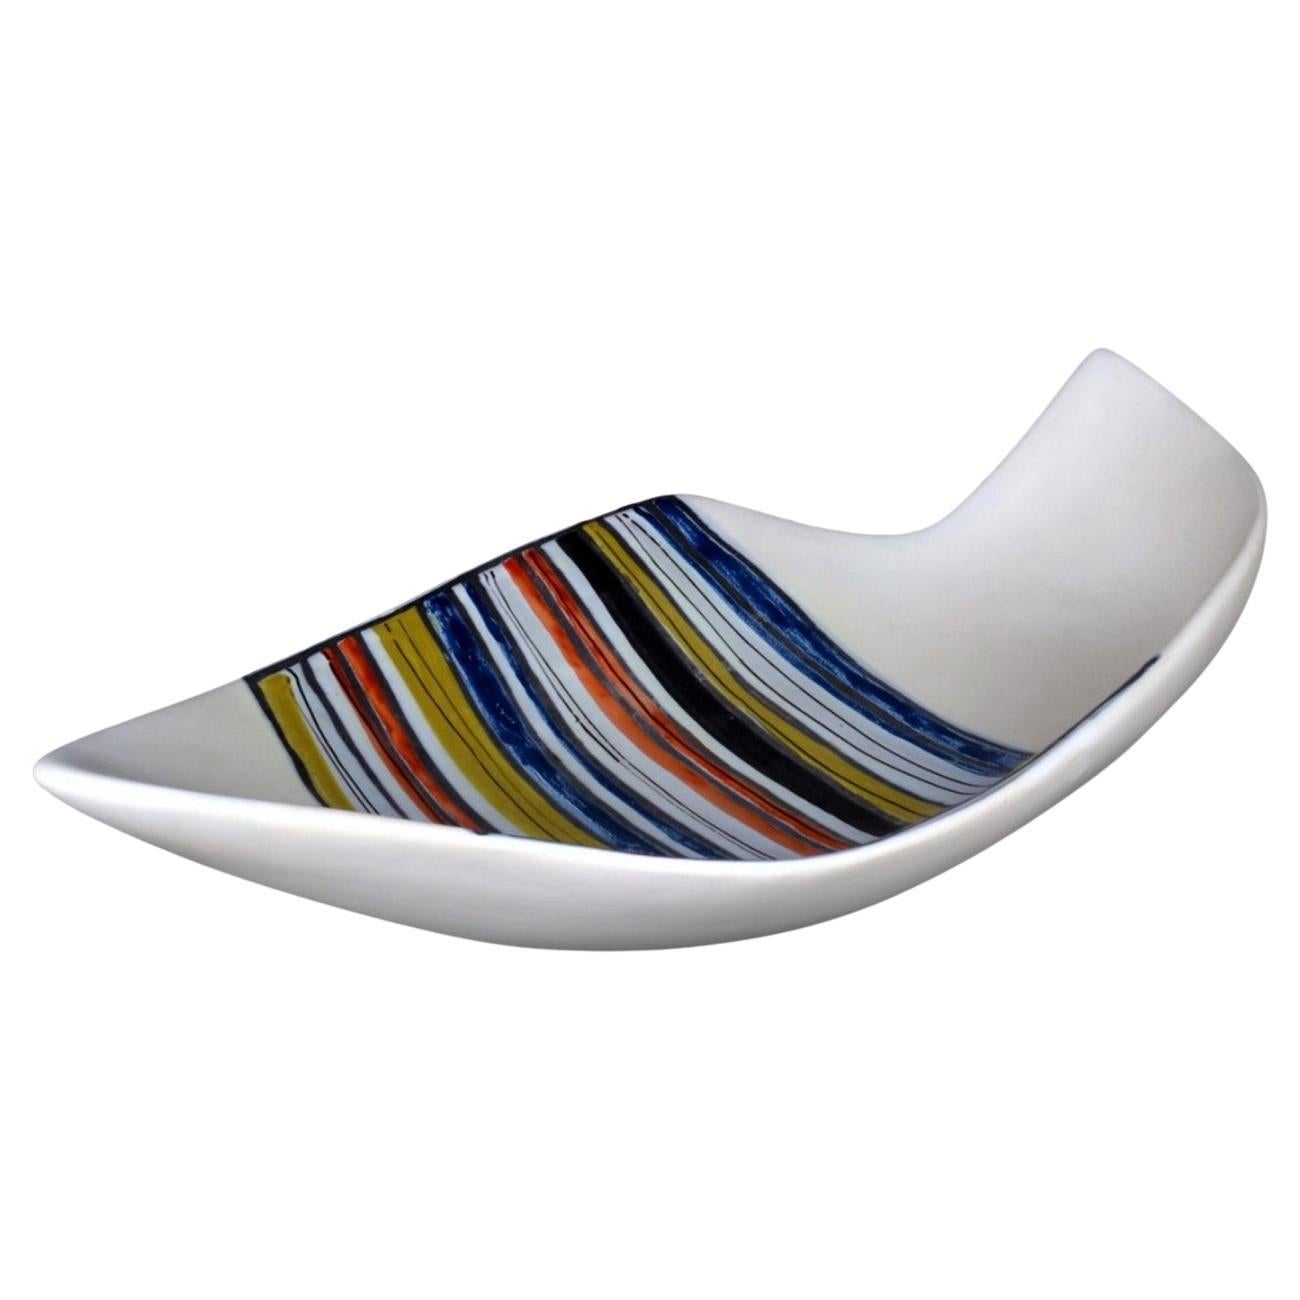 Roger Capron - Ceramic Dish with Stripes 